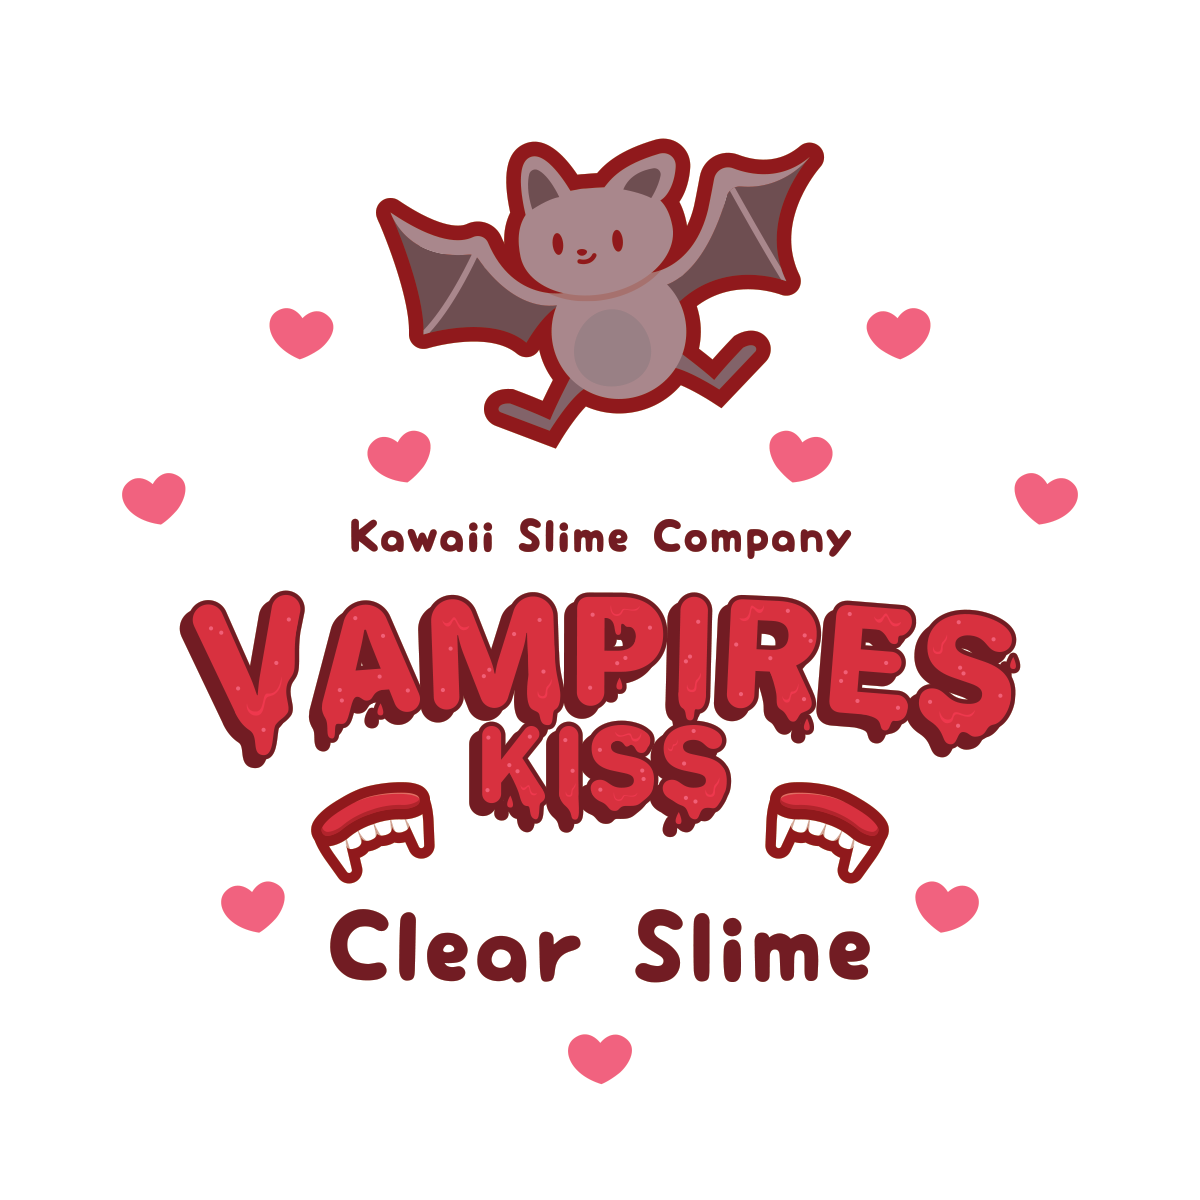 Vampire's Kiss Clear Slime